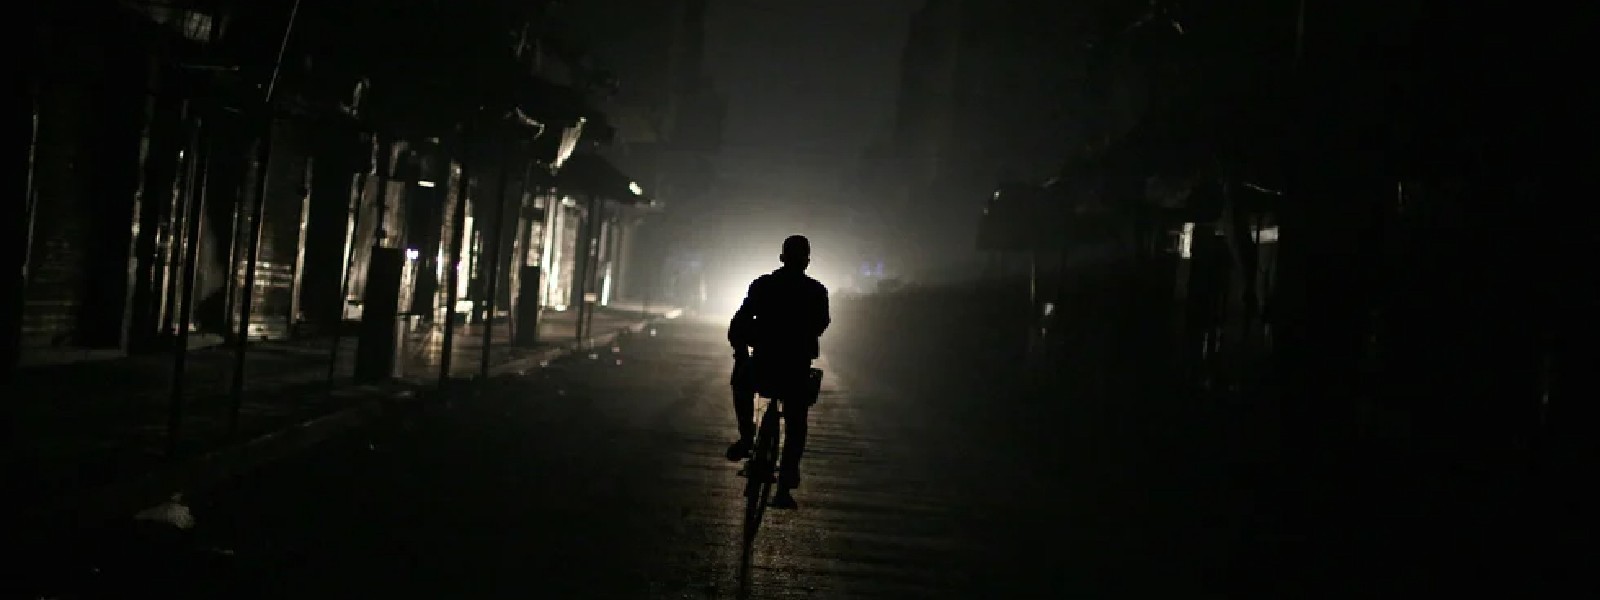 Sri Lanka likely to go dark next year, as electricity crisis worsens